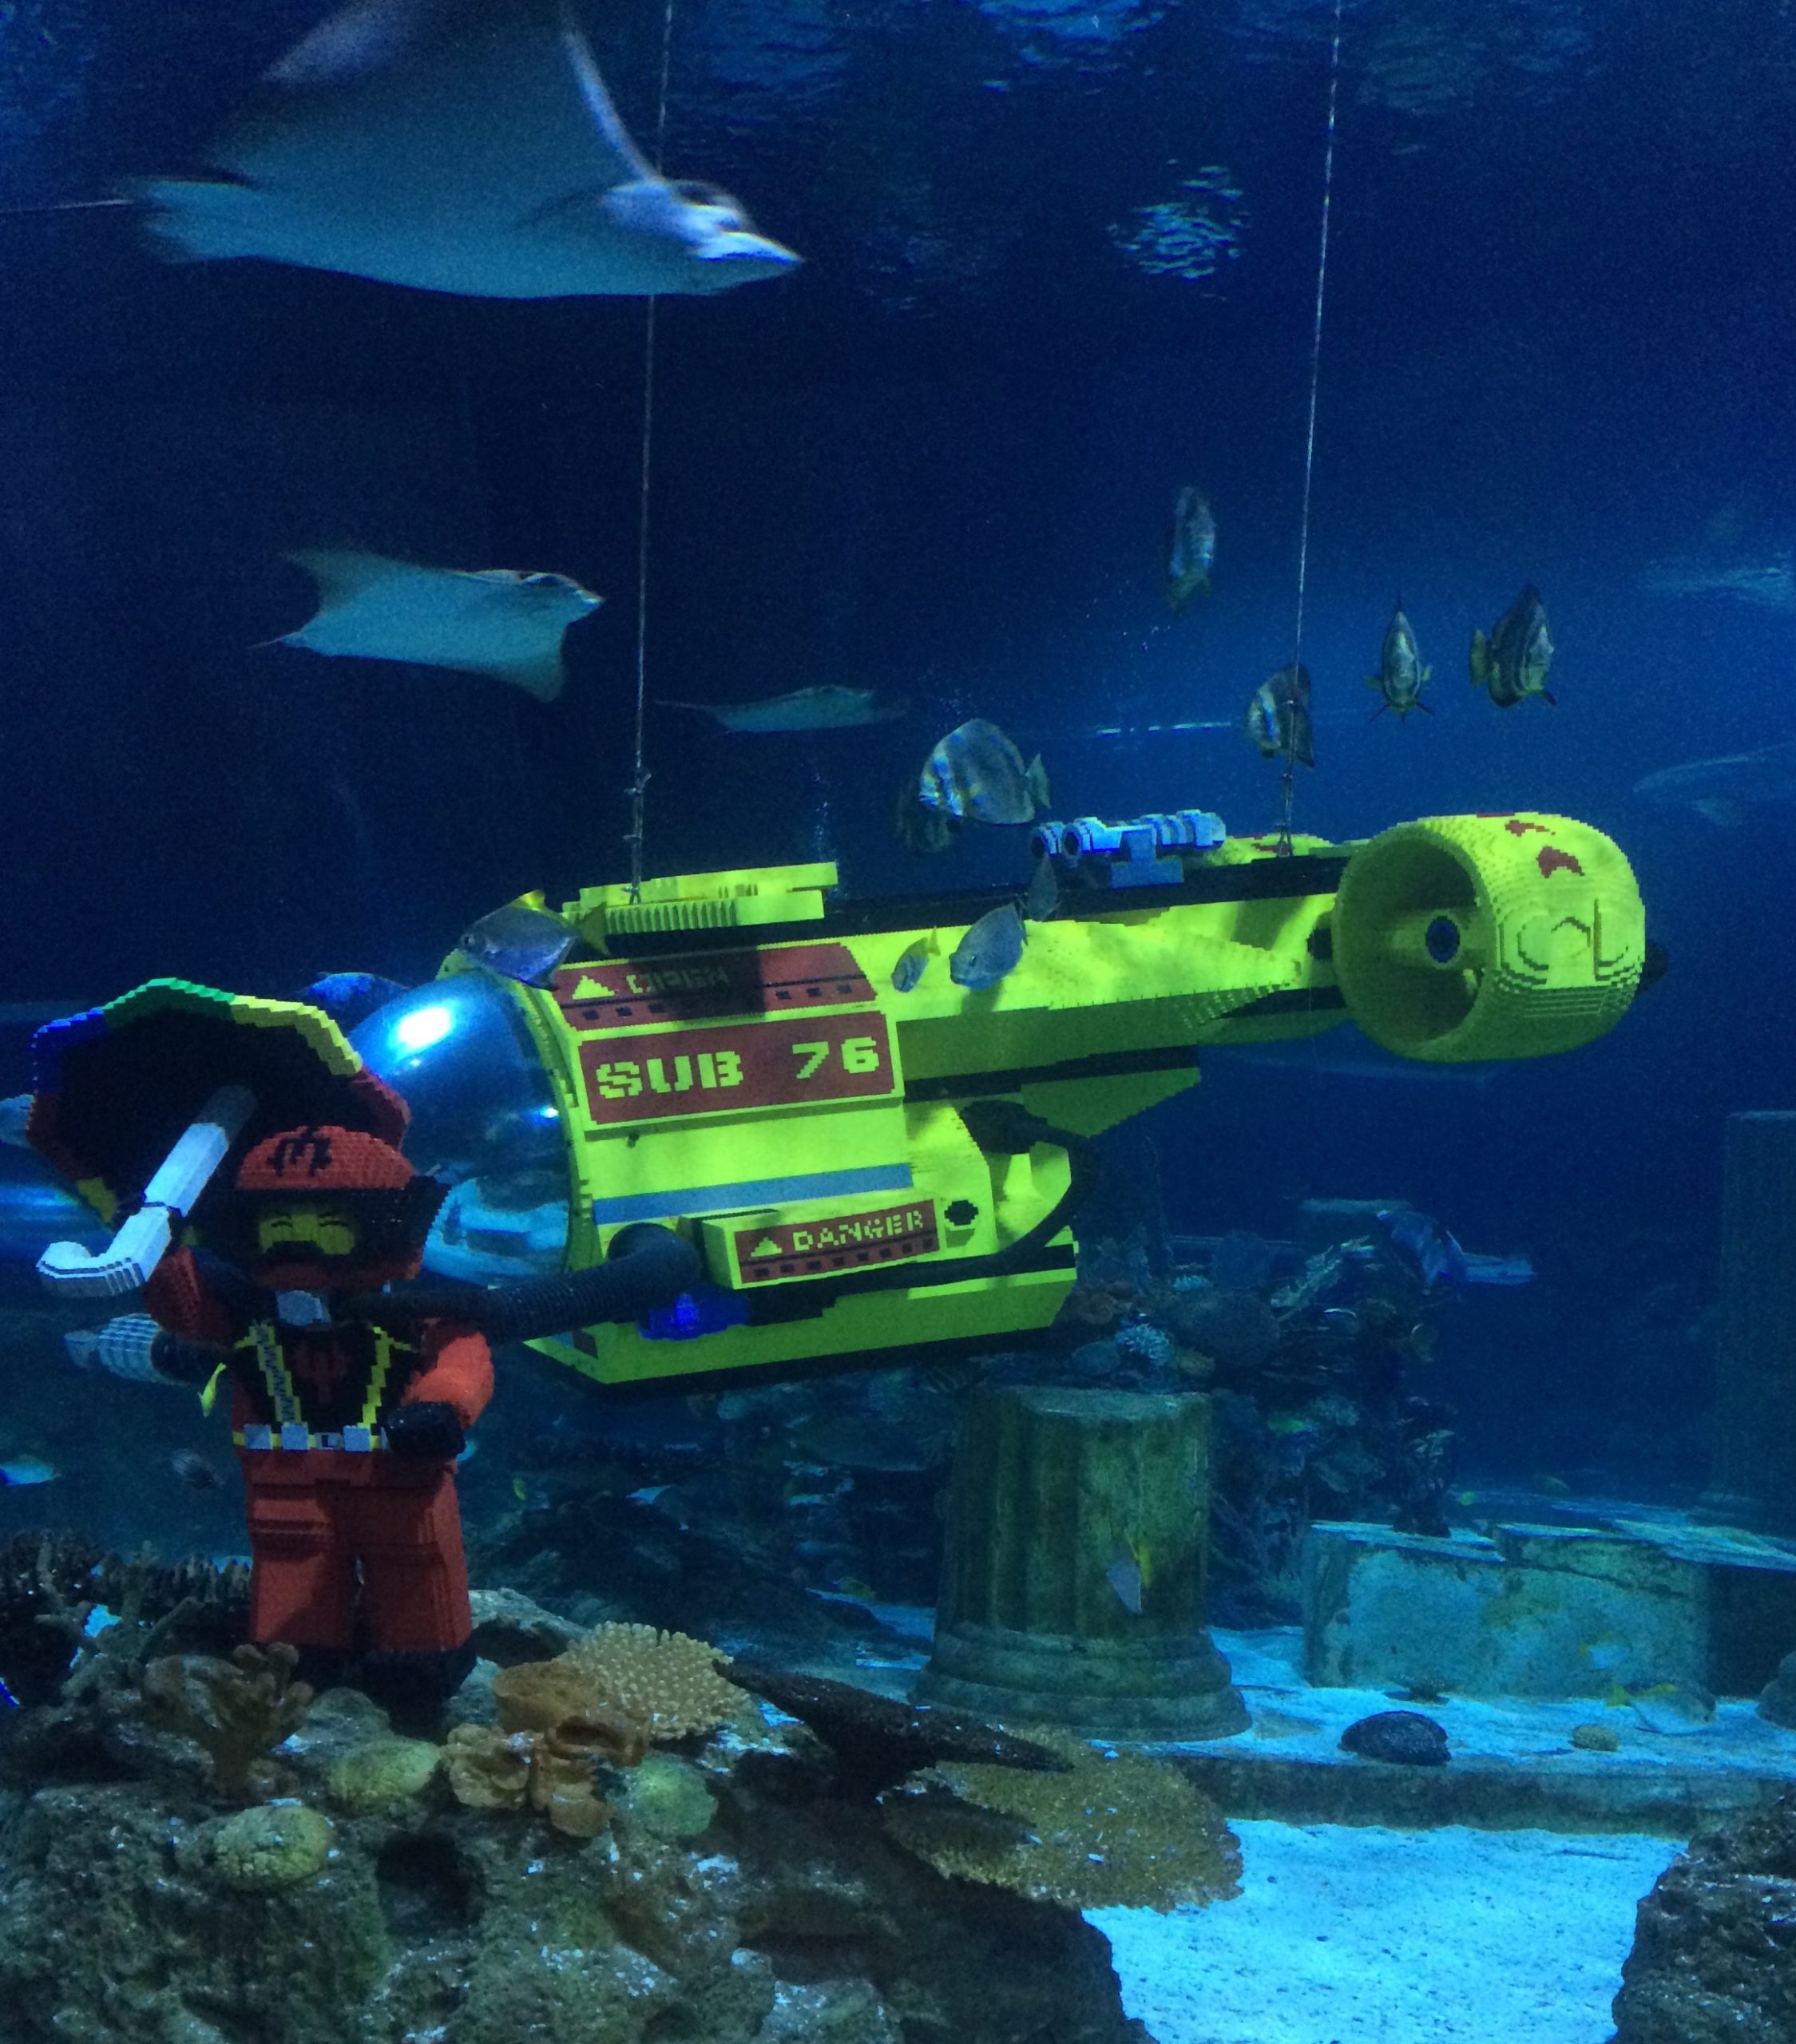 Can LEGO Go in an Aquarium - Creating Fish Fans of LEGO!